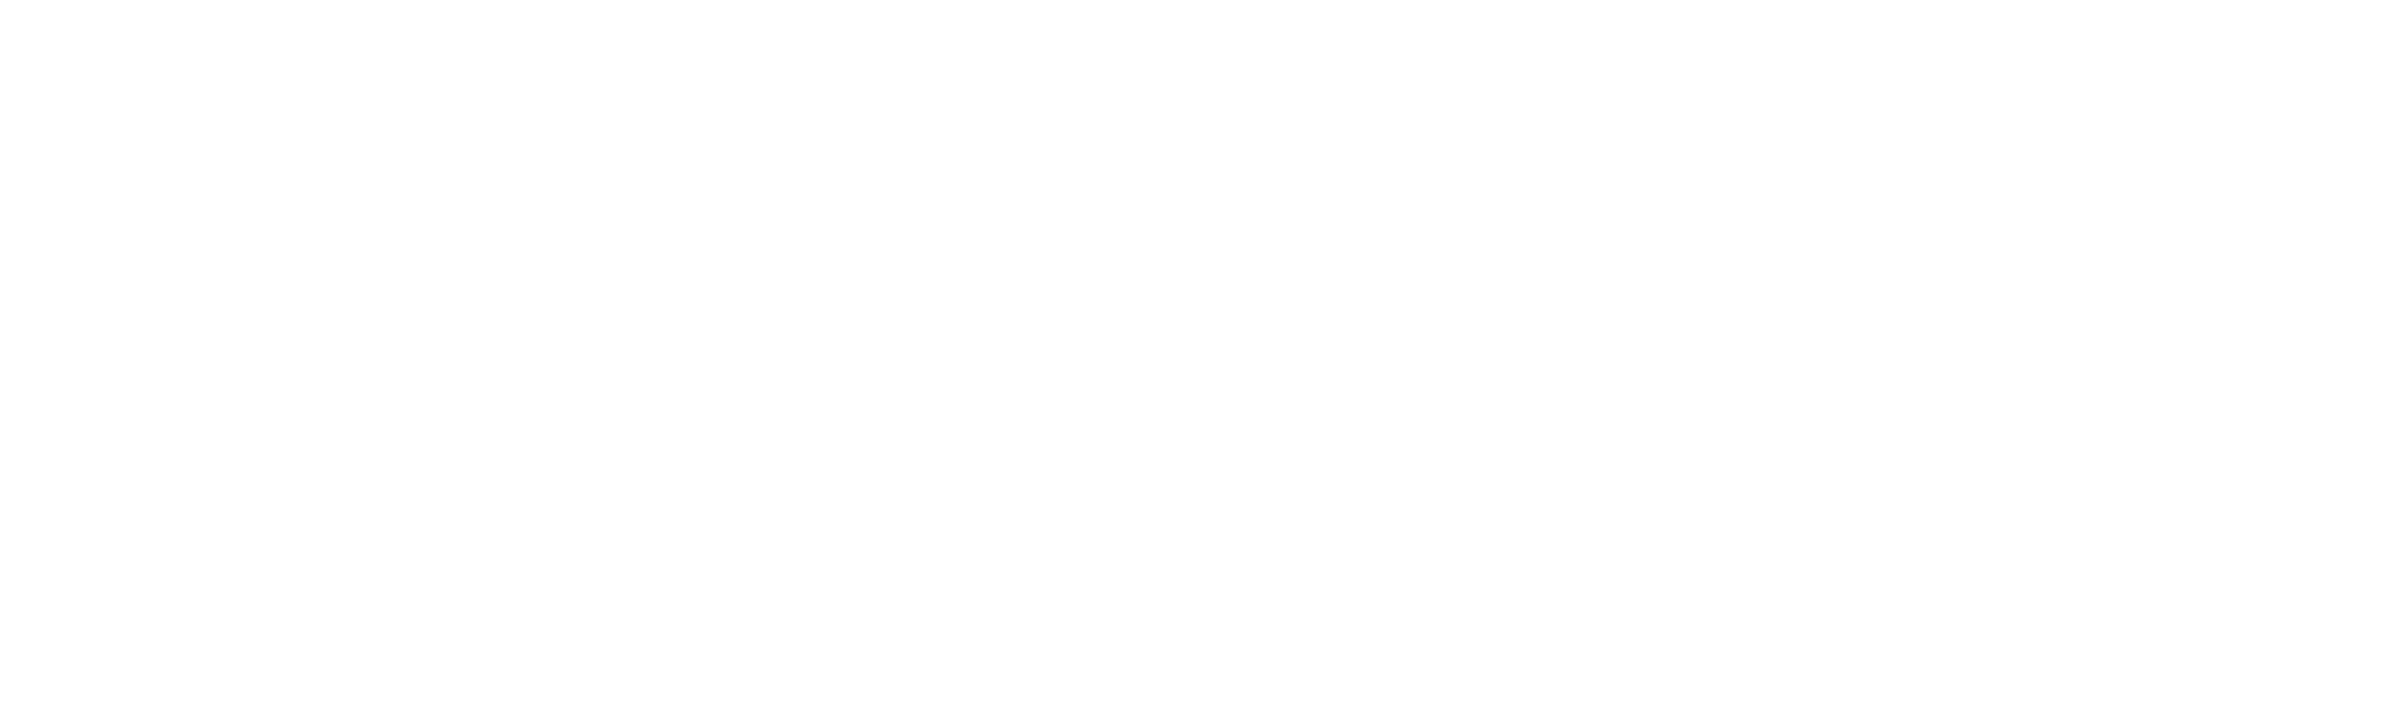 EWERS Logo